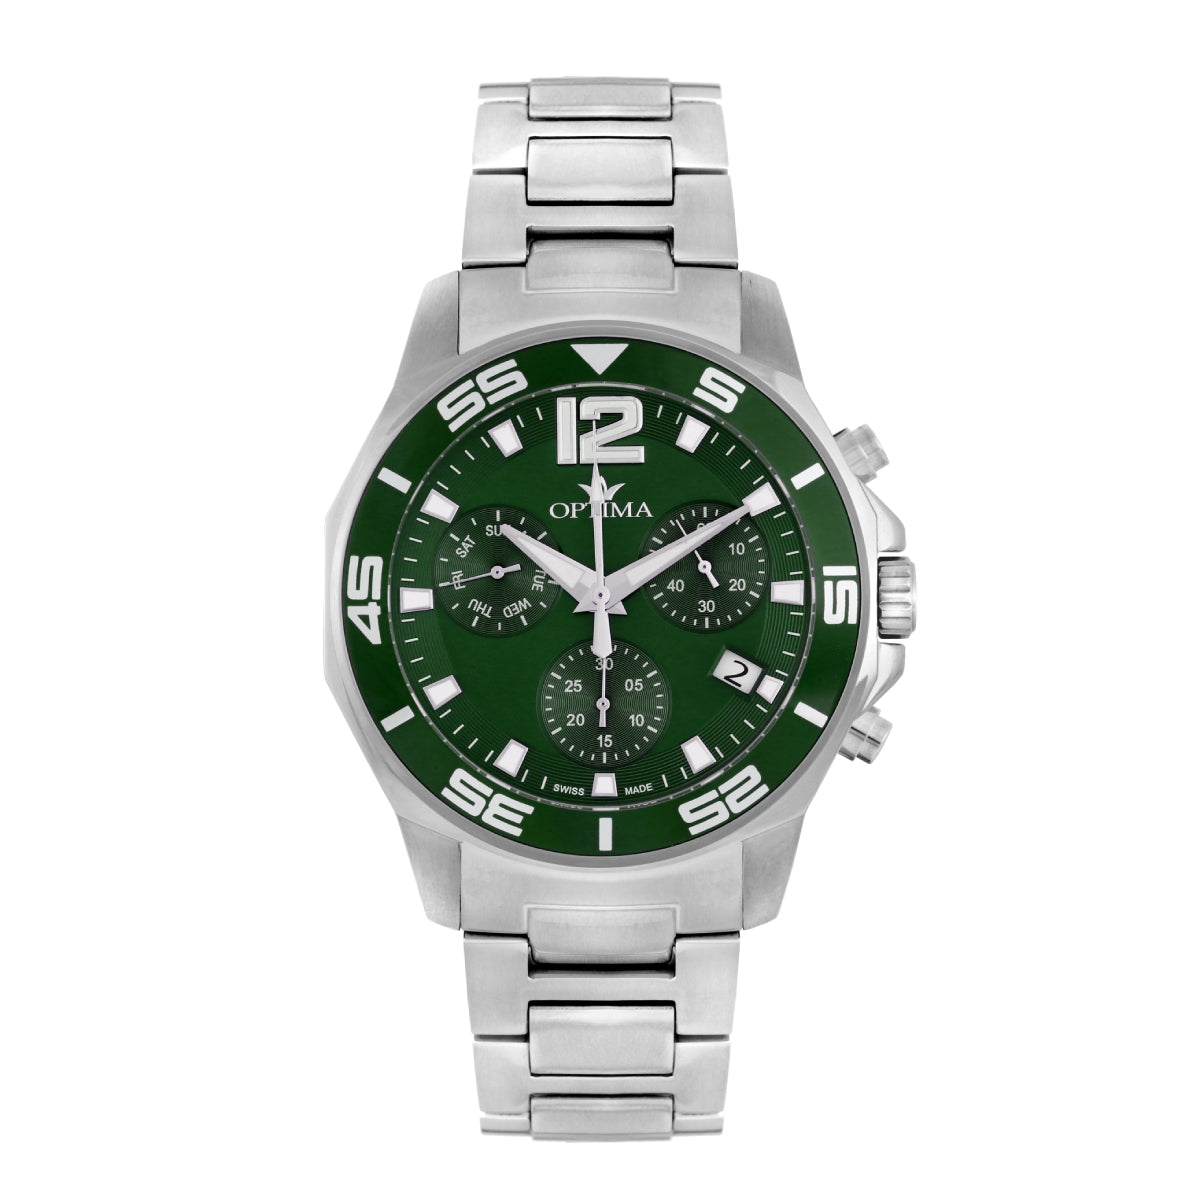 Optima Men's Swiss Quartz Watch with Green Dial - OPT-0010